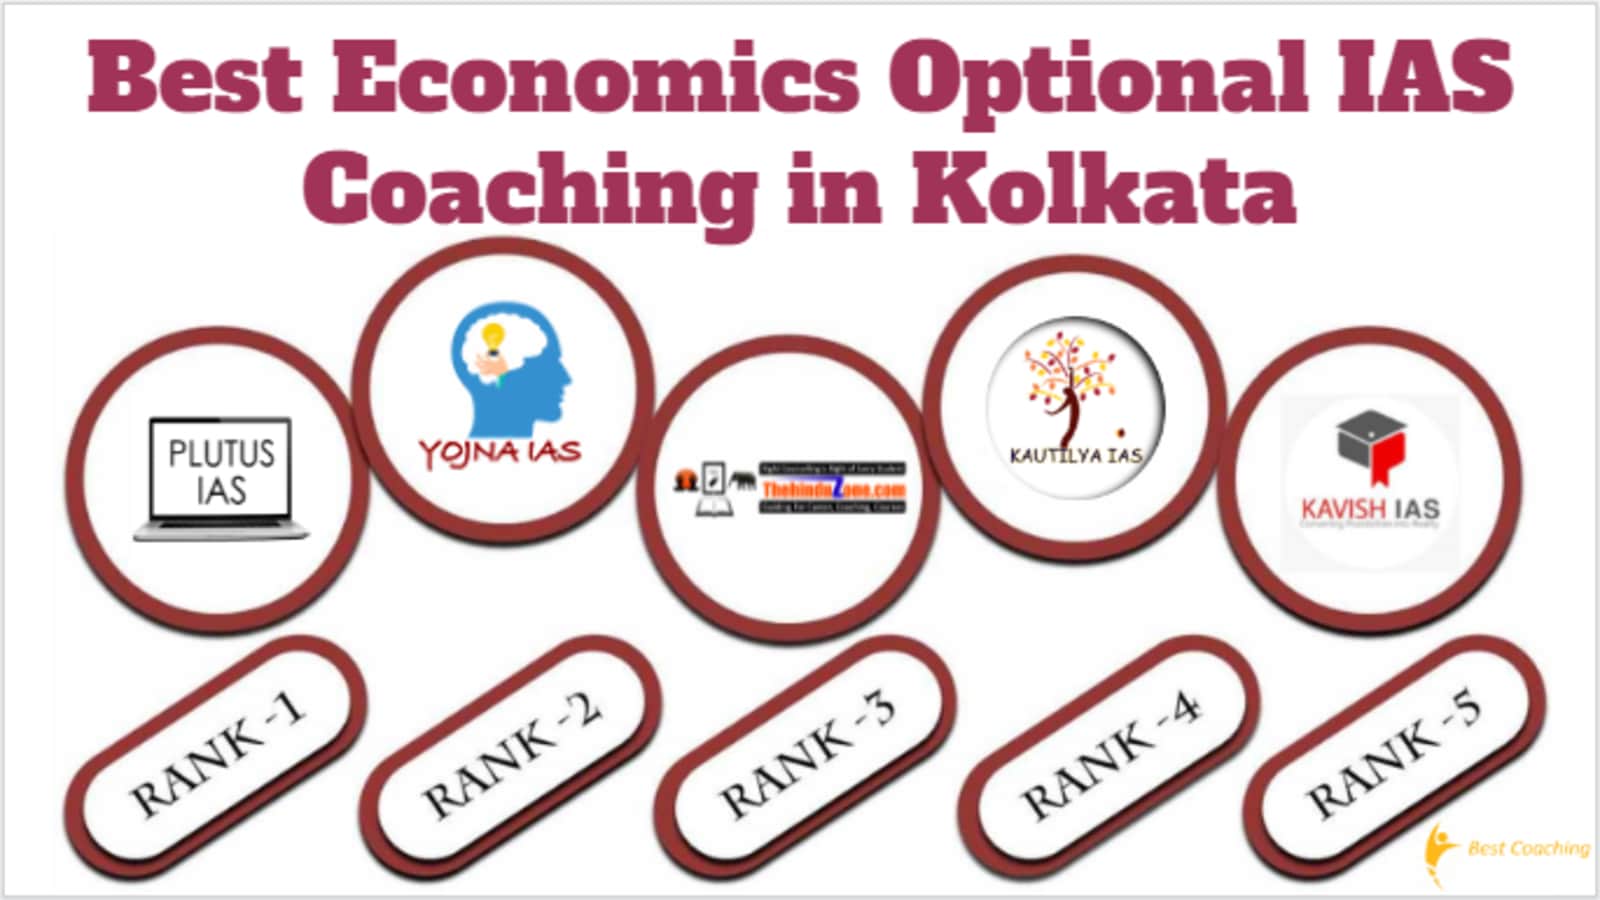 Best Economics Optional IAS Coaching in Kolkata